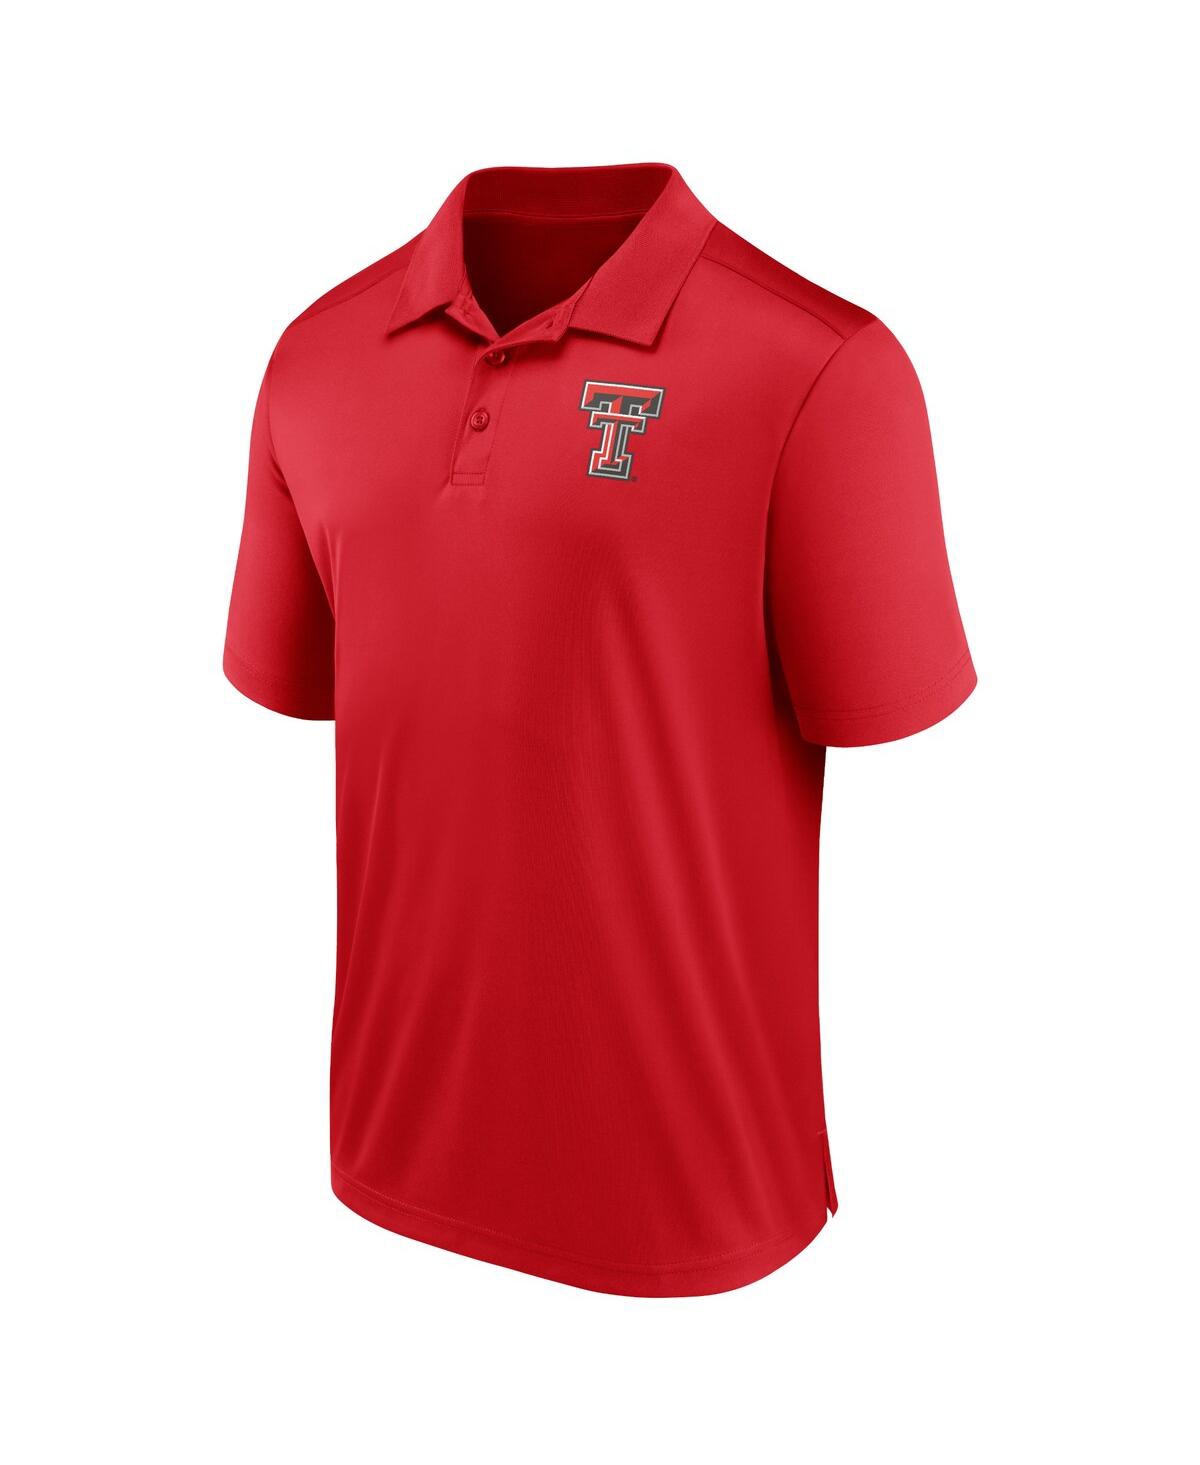 Shop Fanatics Men's  Red Texas Tech Red Raiders Left Side Block Polo Shirt